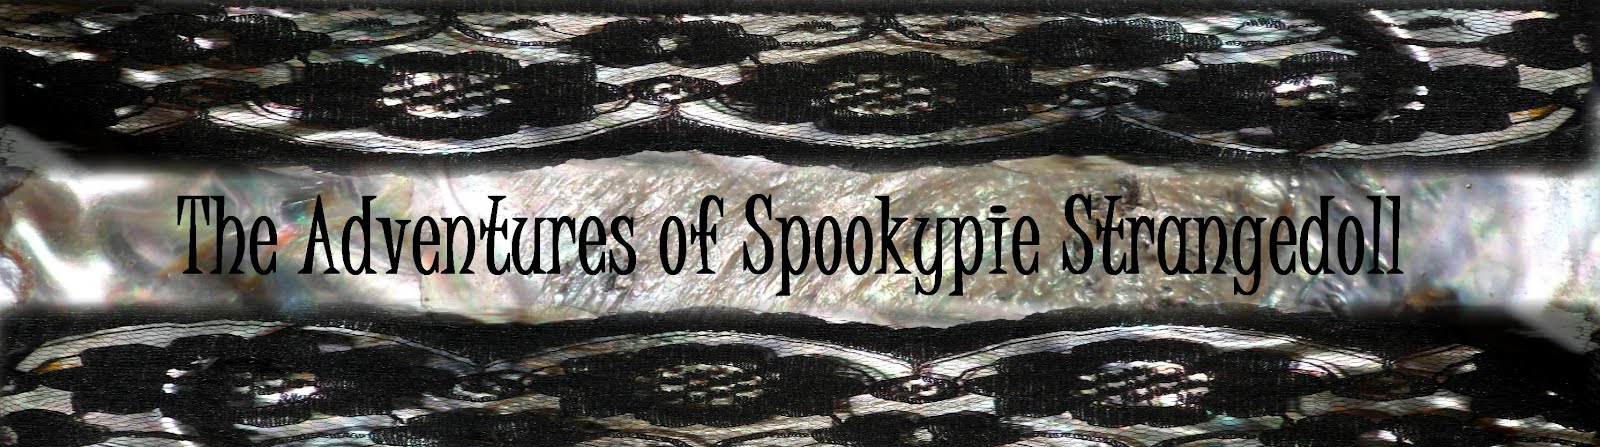 The Adventures of Spookypie Strangedoll